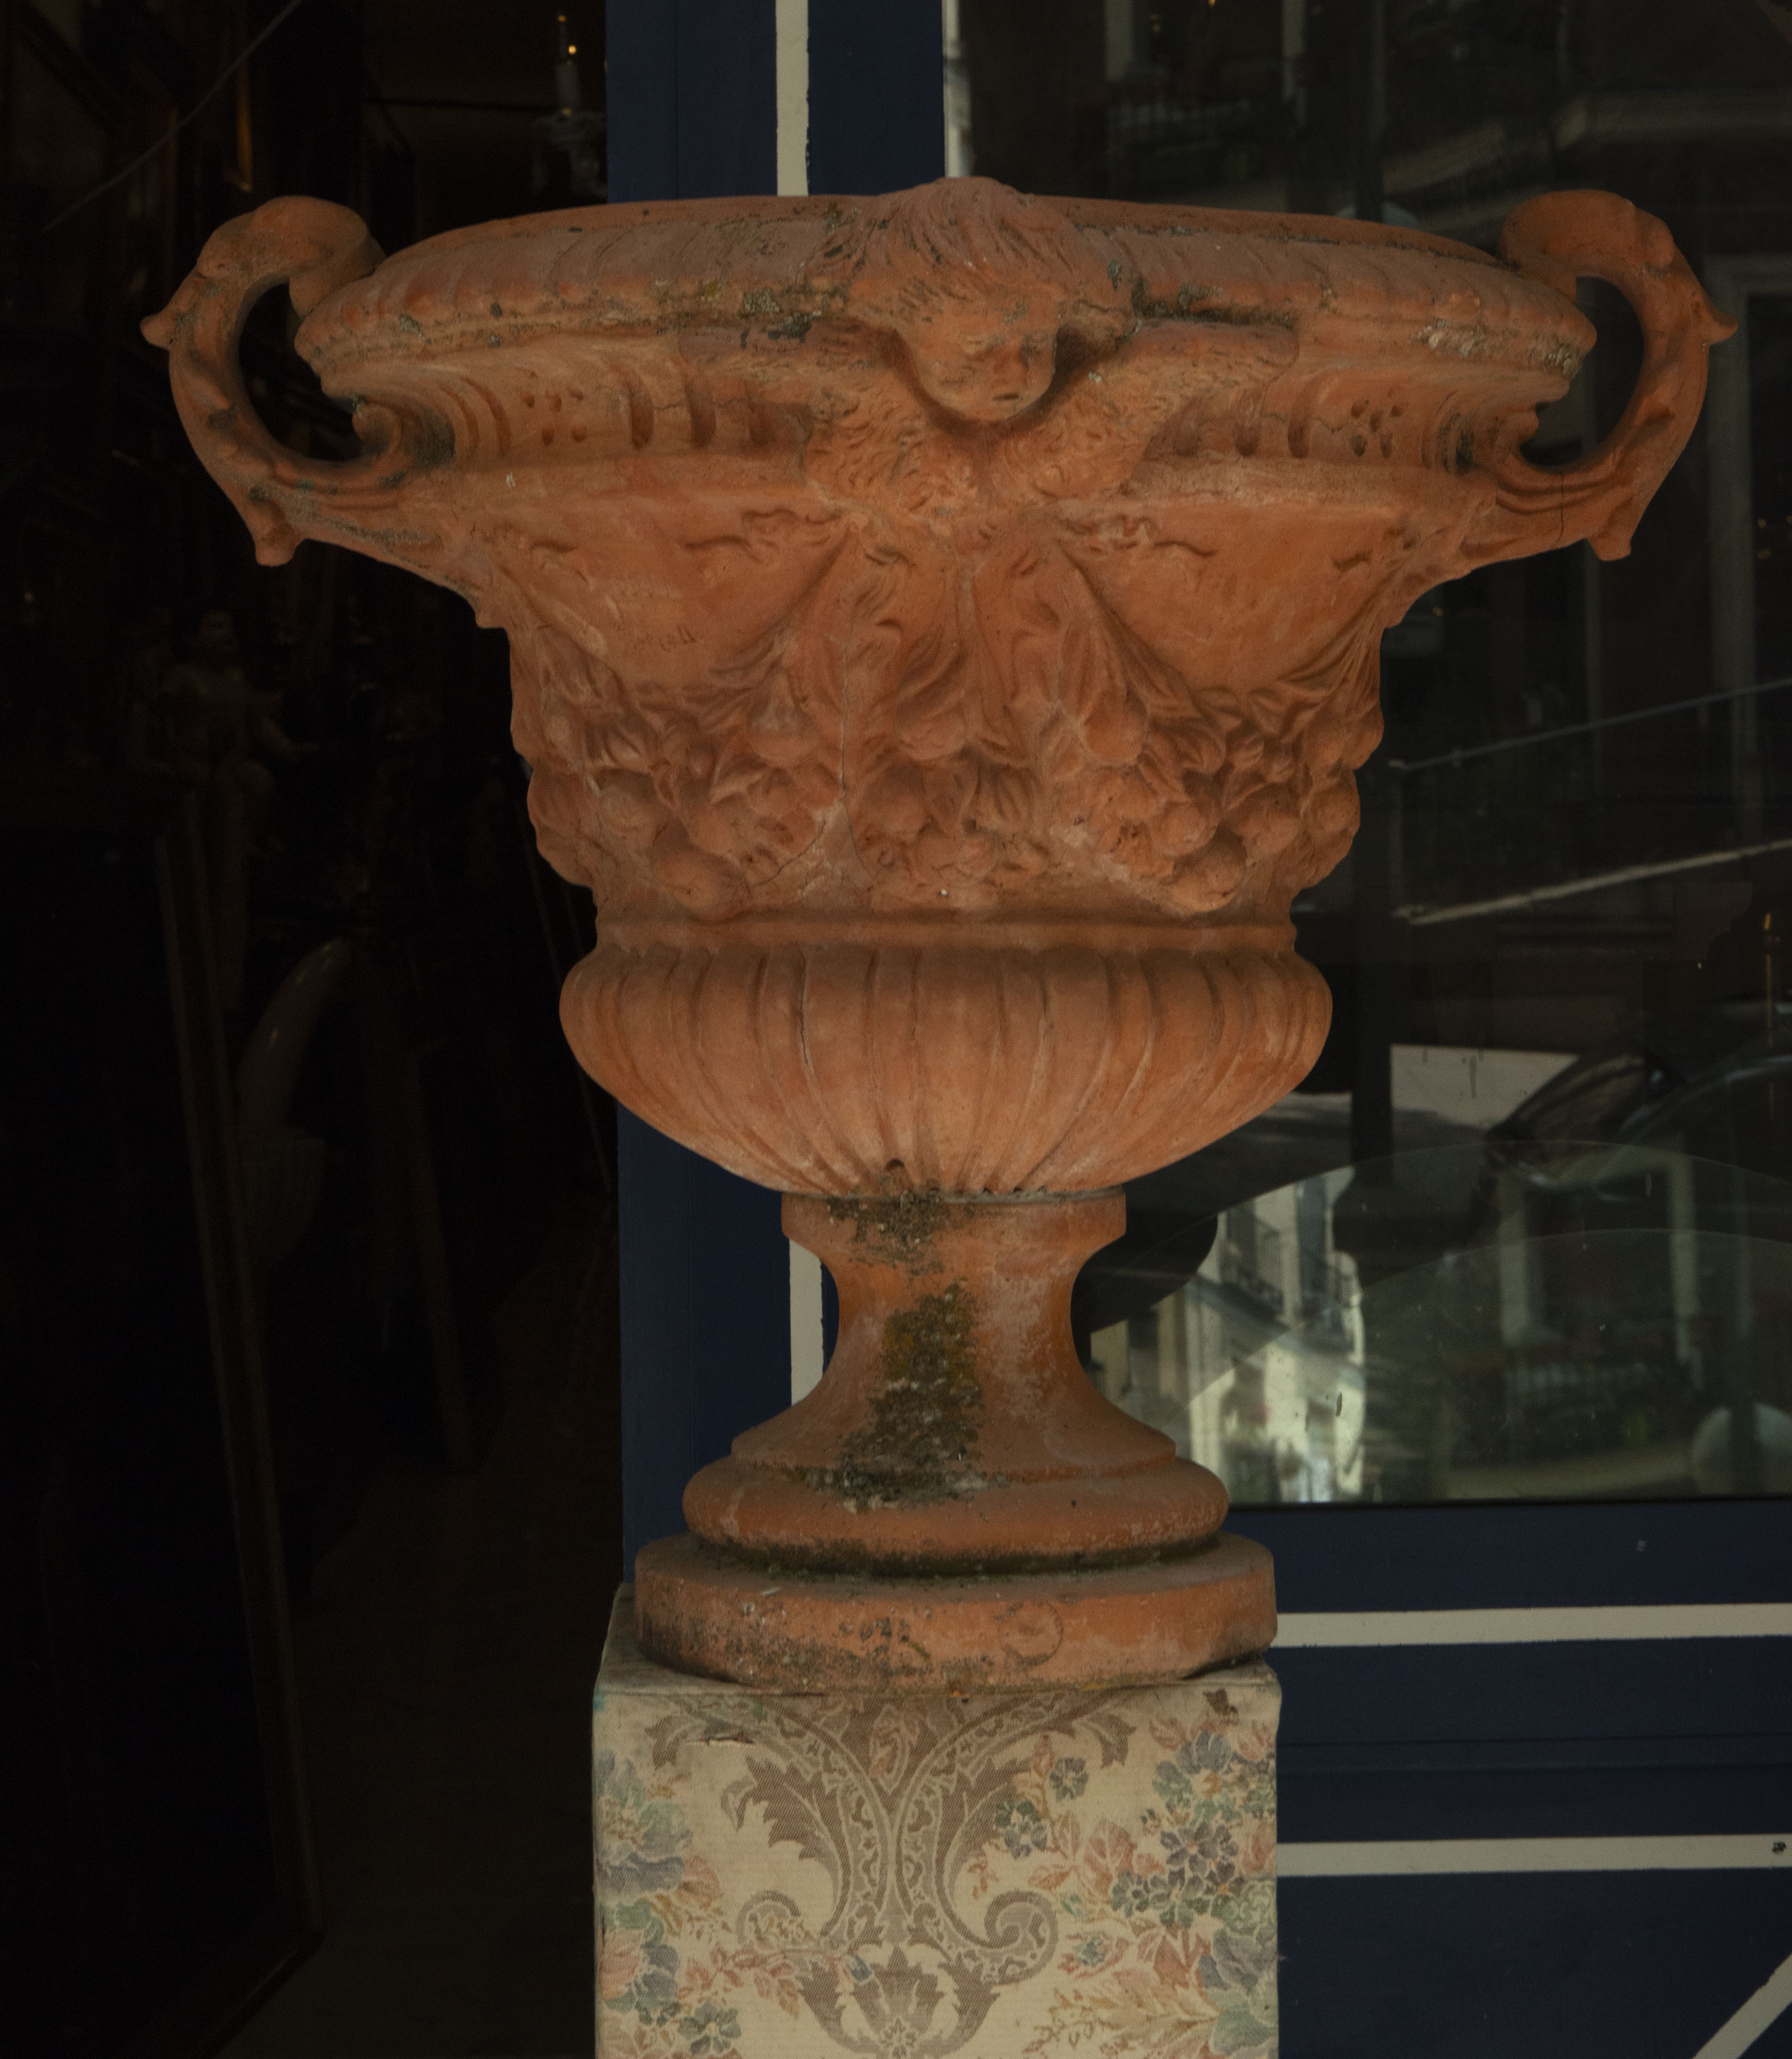 Large Italian terracotta planter vase for outdoors, 19th century